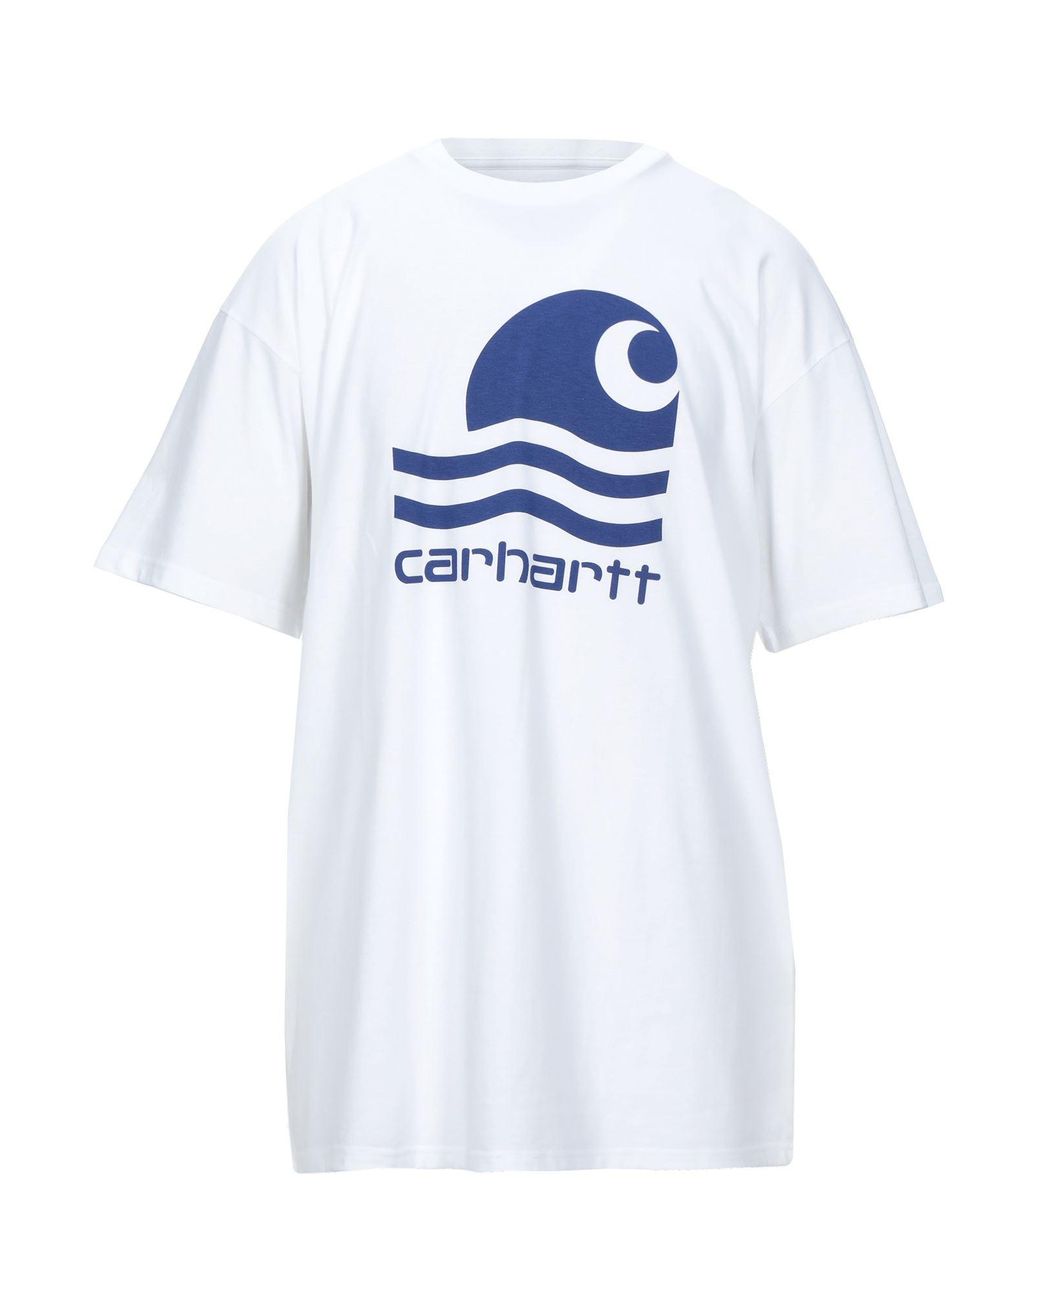 Carhartt Cotton T-shirt in White for Men - Lyst